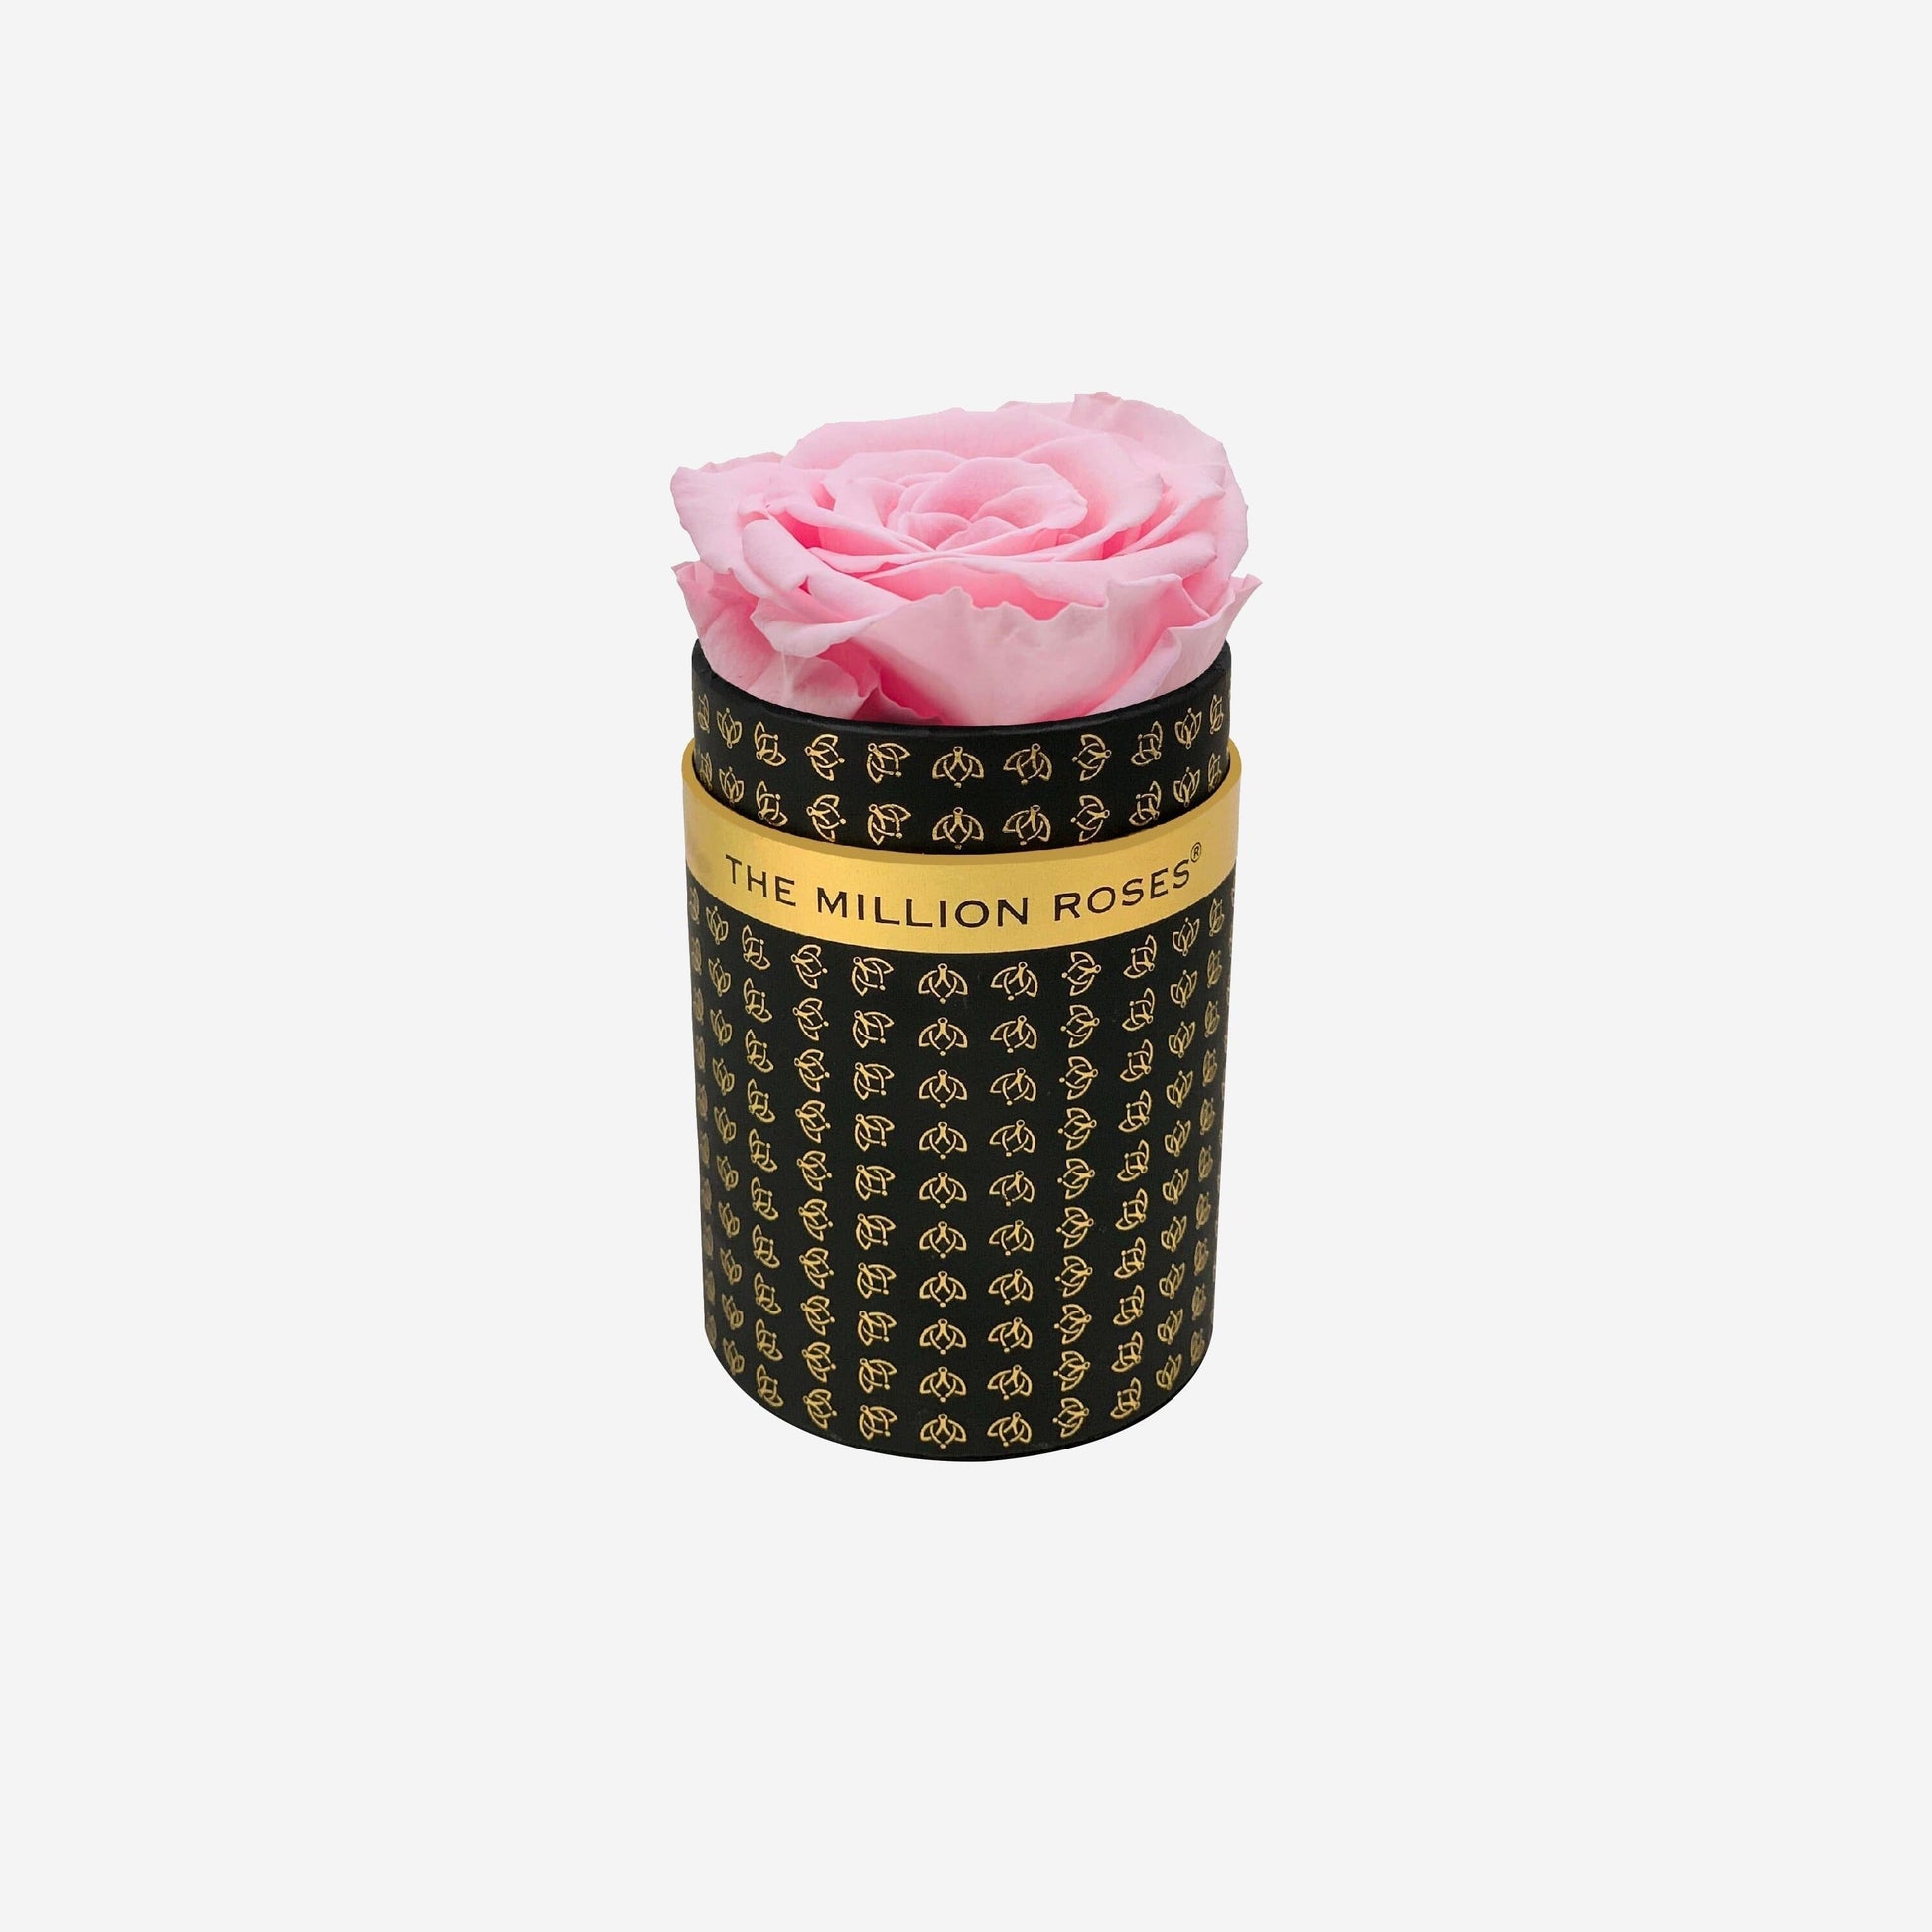 Single Black Monogram Box | Light Pink Rose - The Million Roses